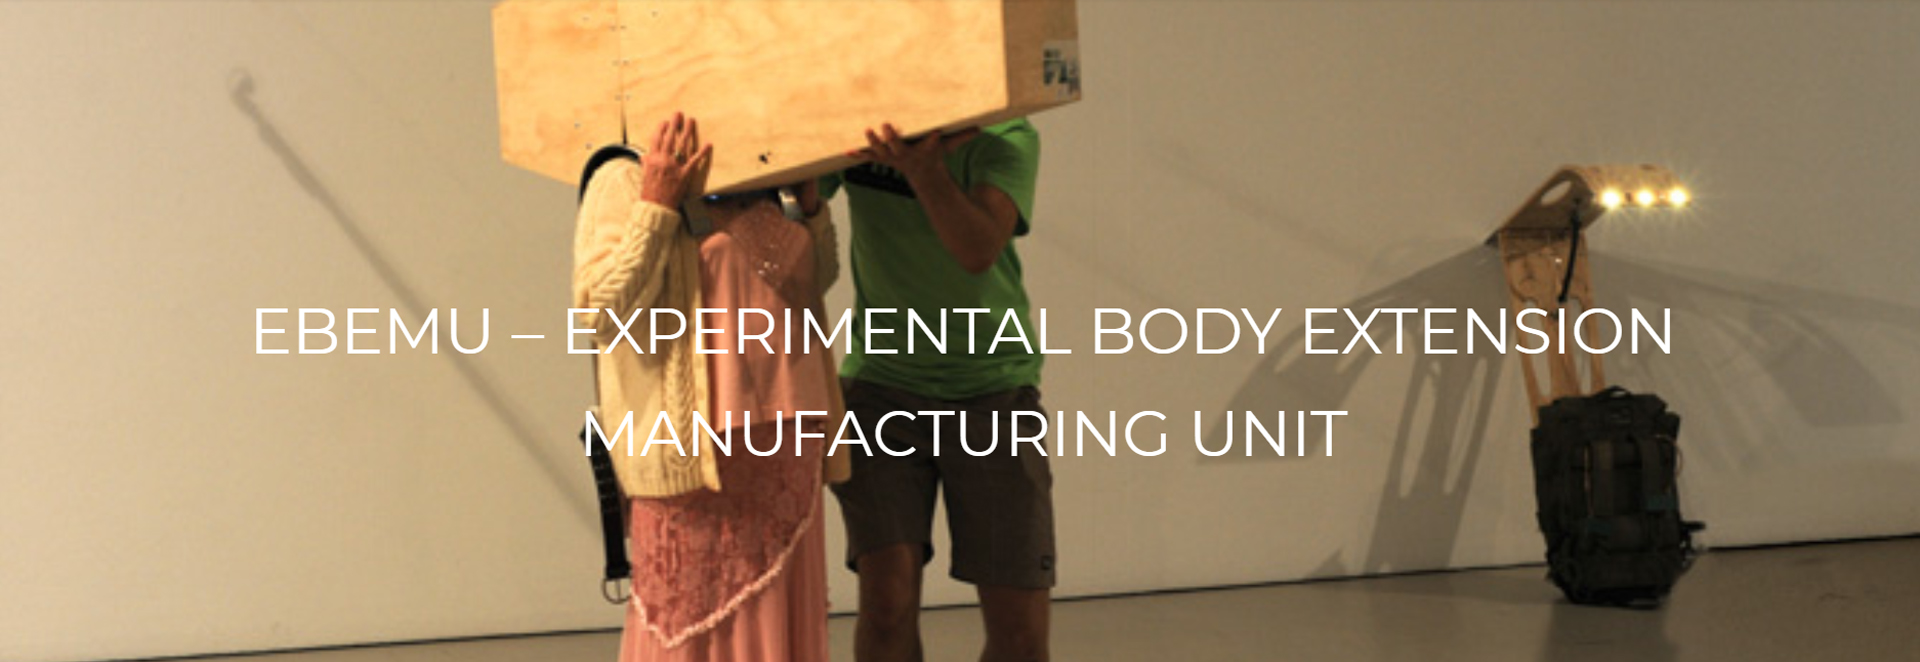 ©, Paul Gazzola and Paul Granjon, Experimental Body Extension Manufacturing Unit (EBEMU)